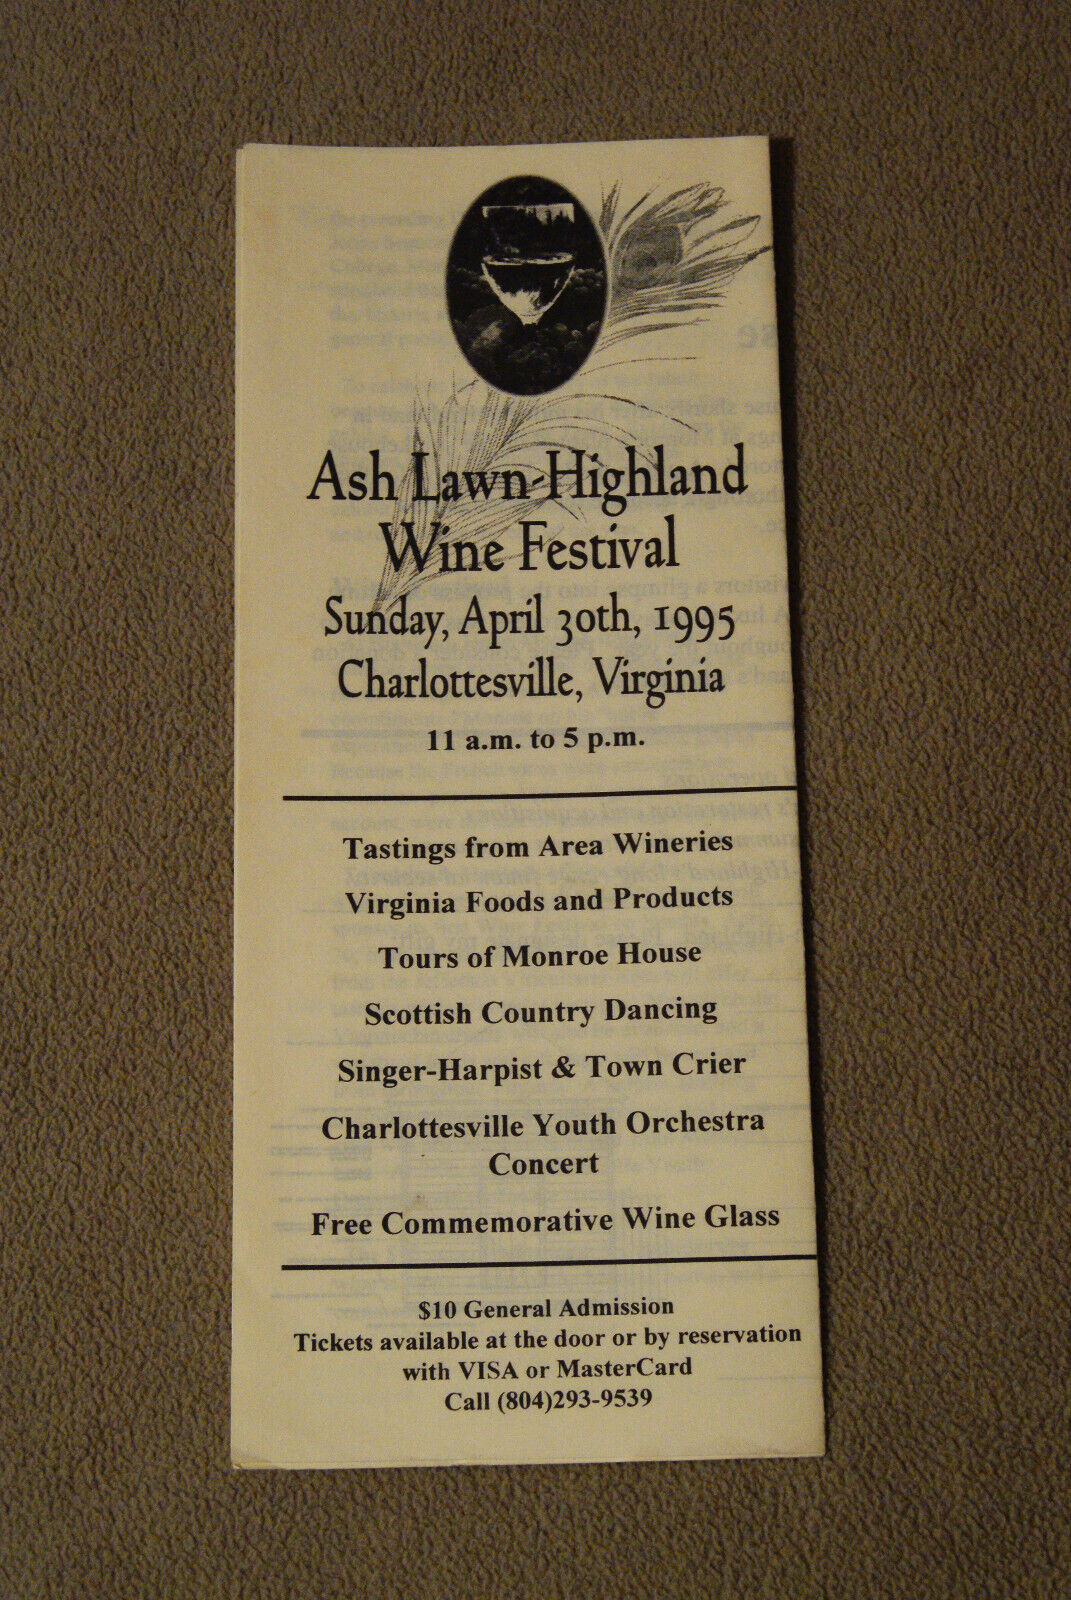 Ash Lawn / Highland Wine Festival Brochure - April 30, 1995